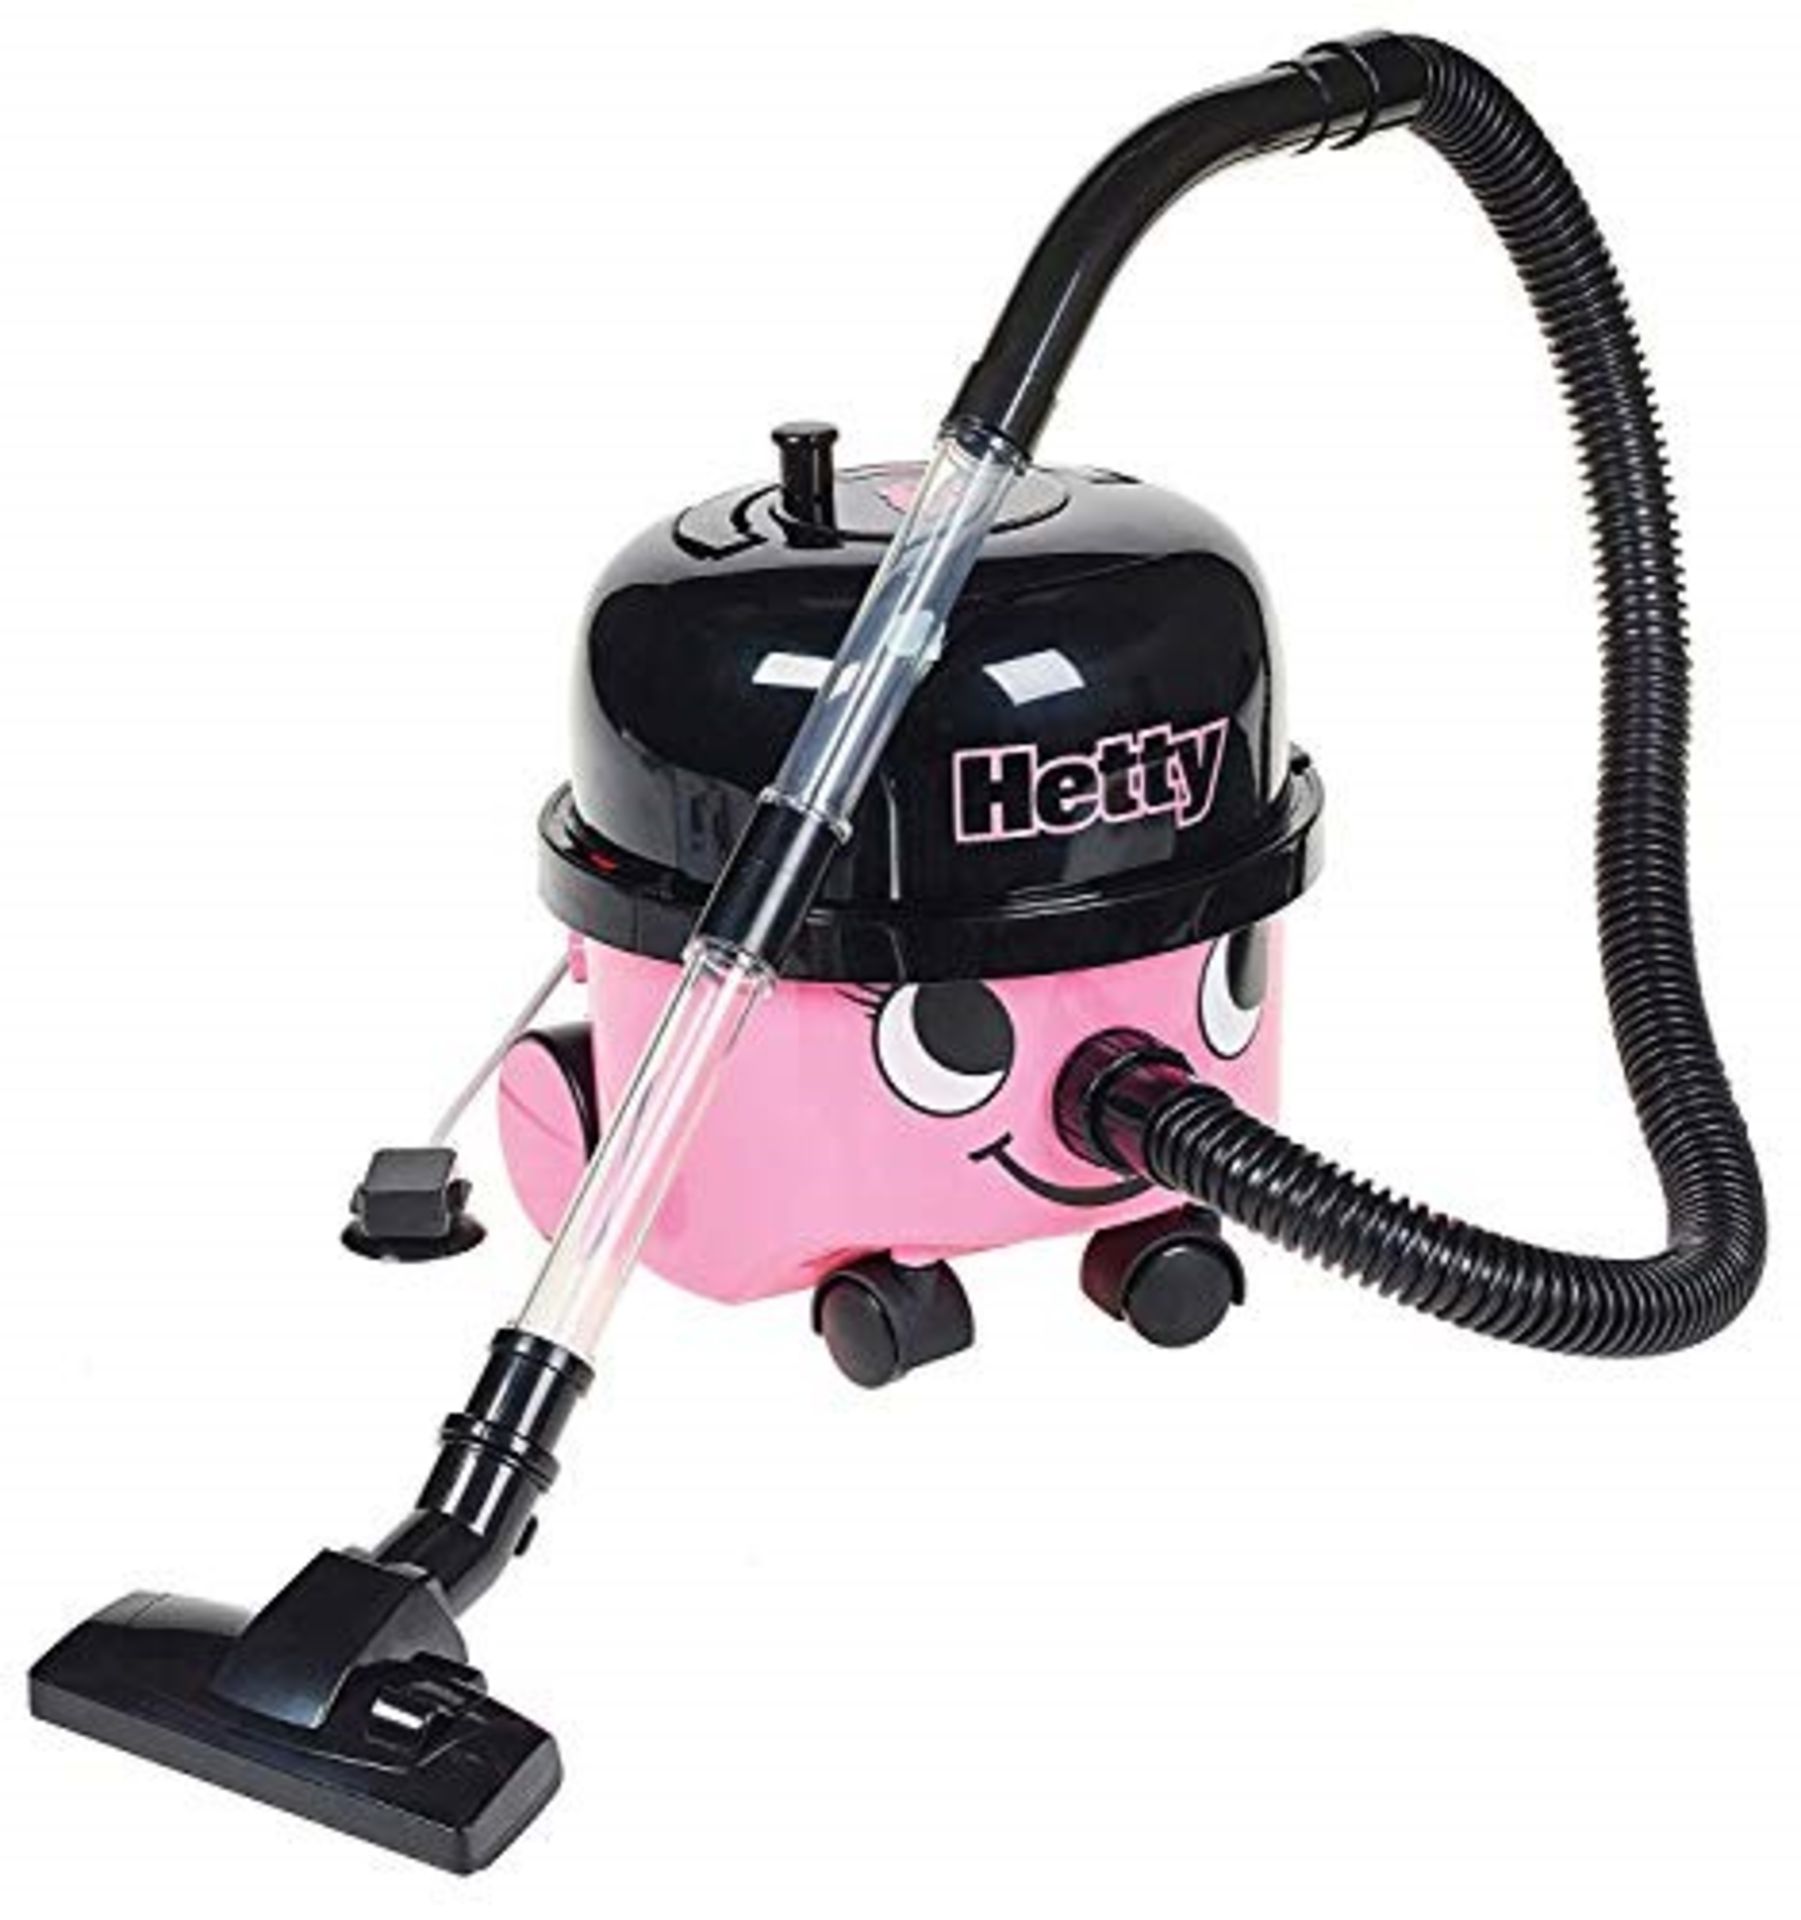 [INCOMPLETE] Casdon plc 729 Casdon Hetty Vacuum Cleaner Toy, Pink